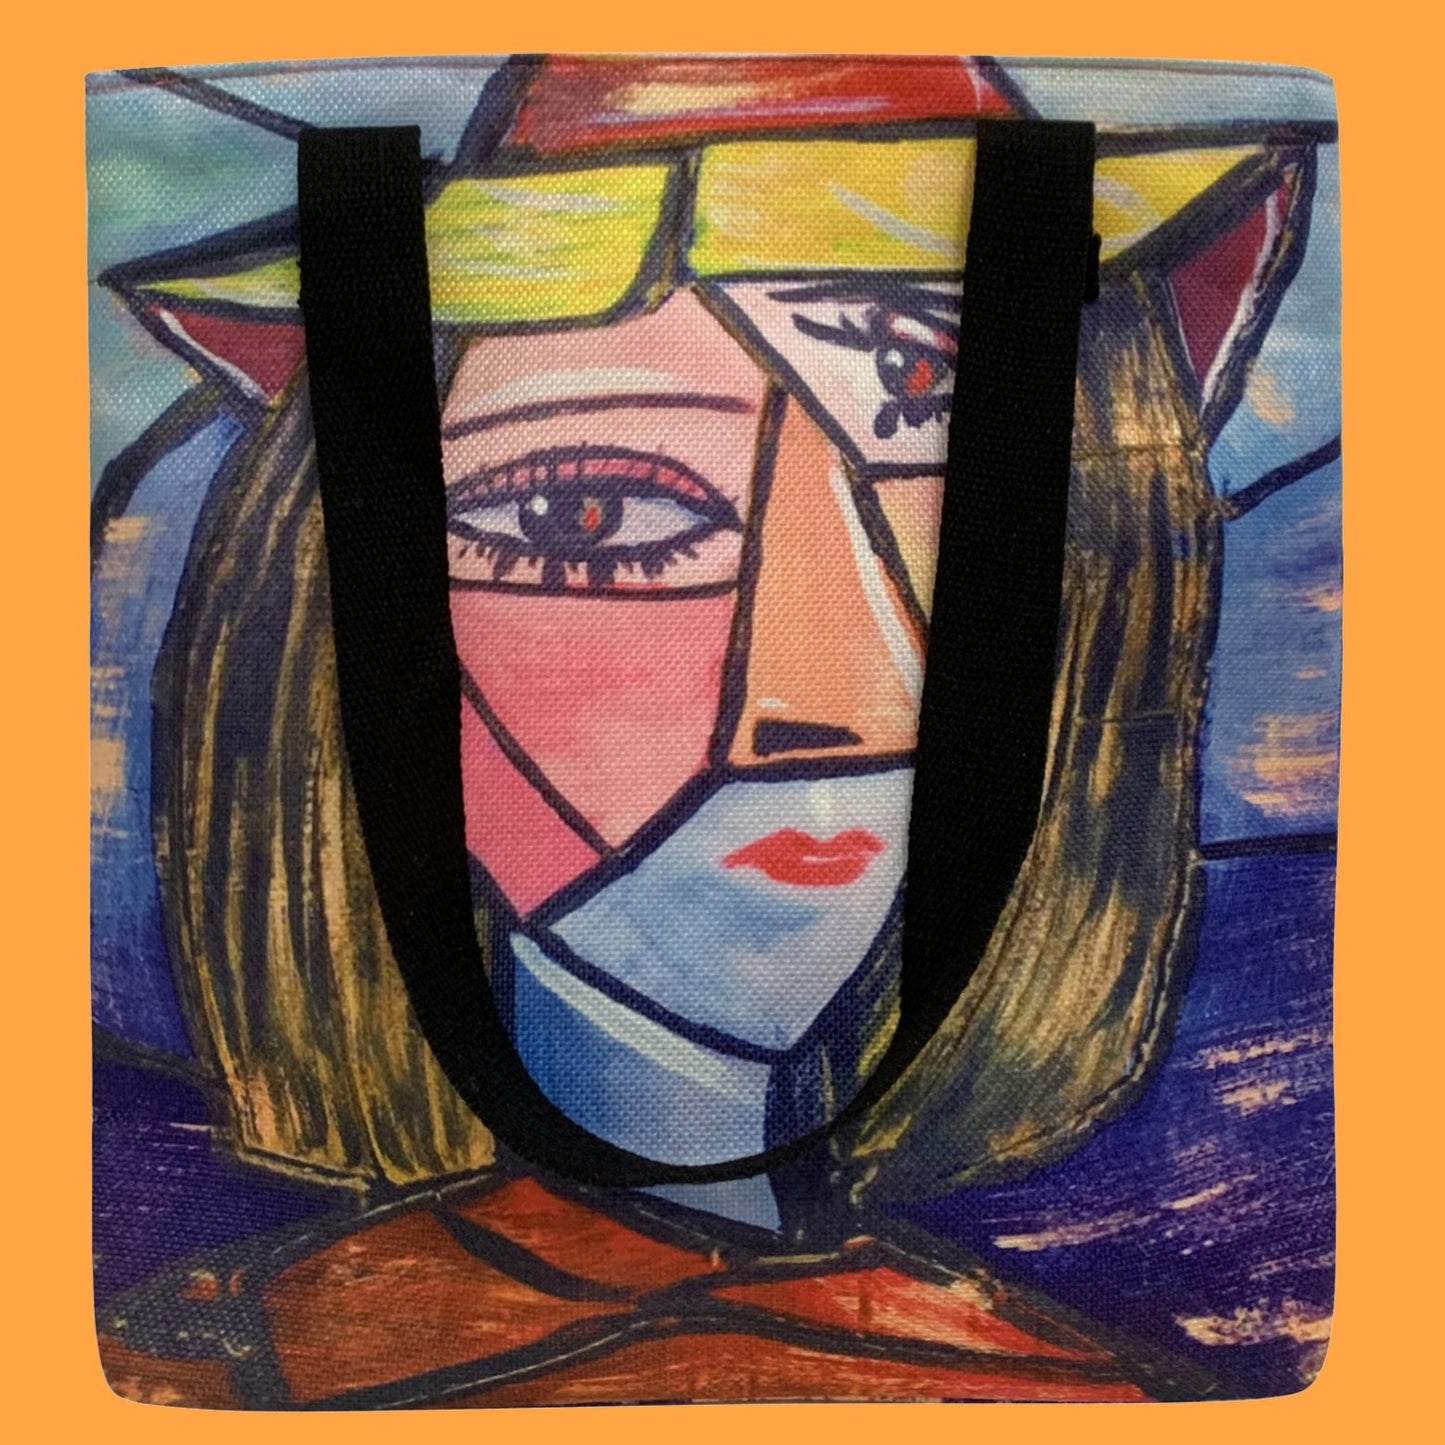 Ostoslaukku, Picasso - Portrait Cubism